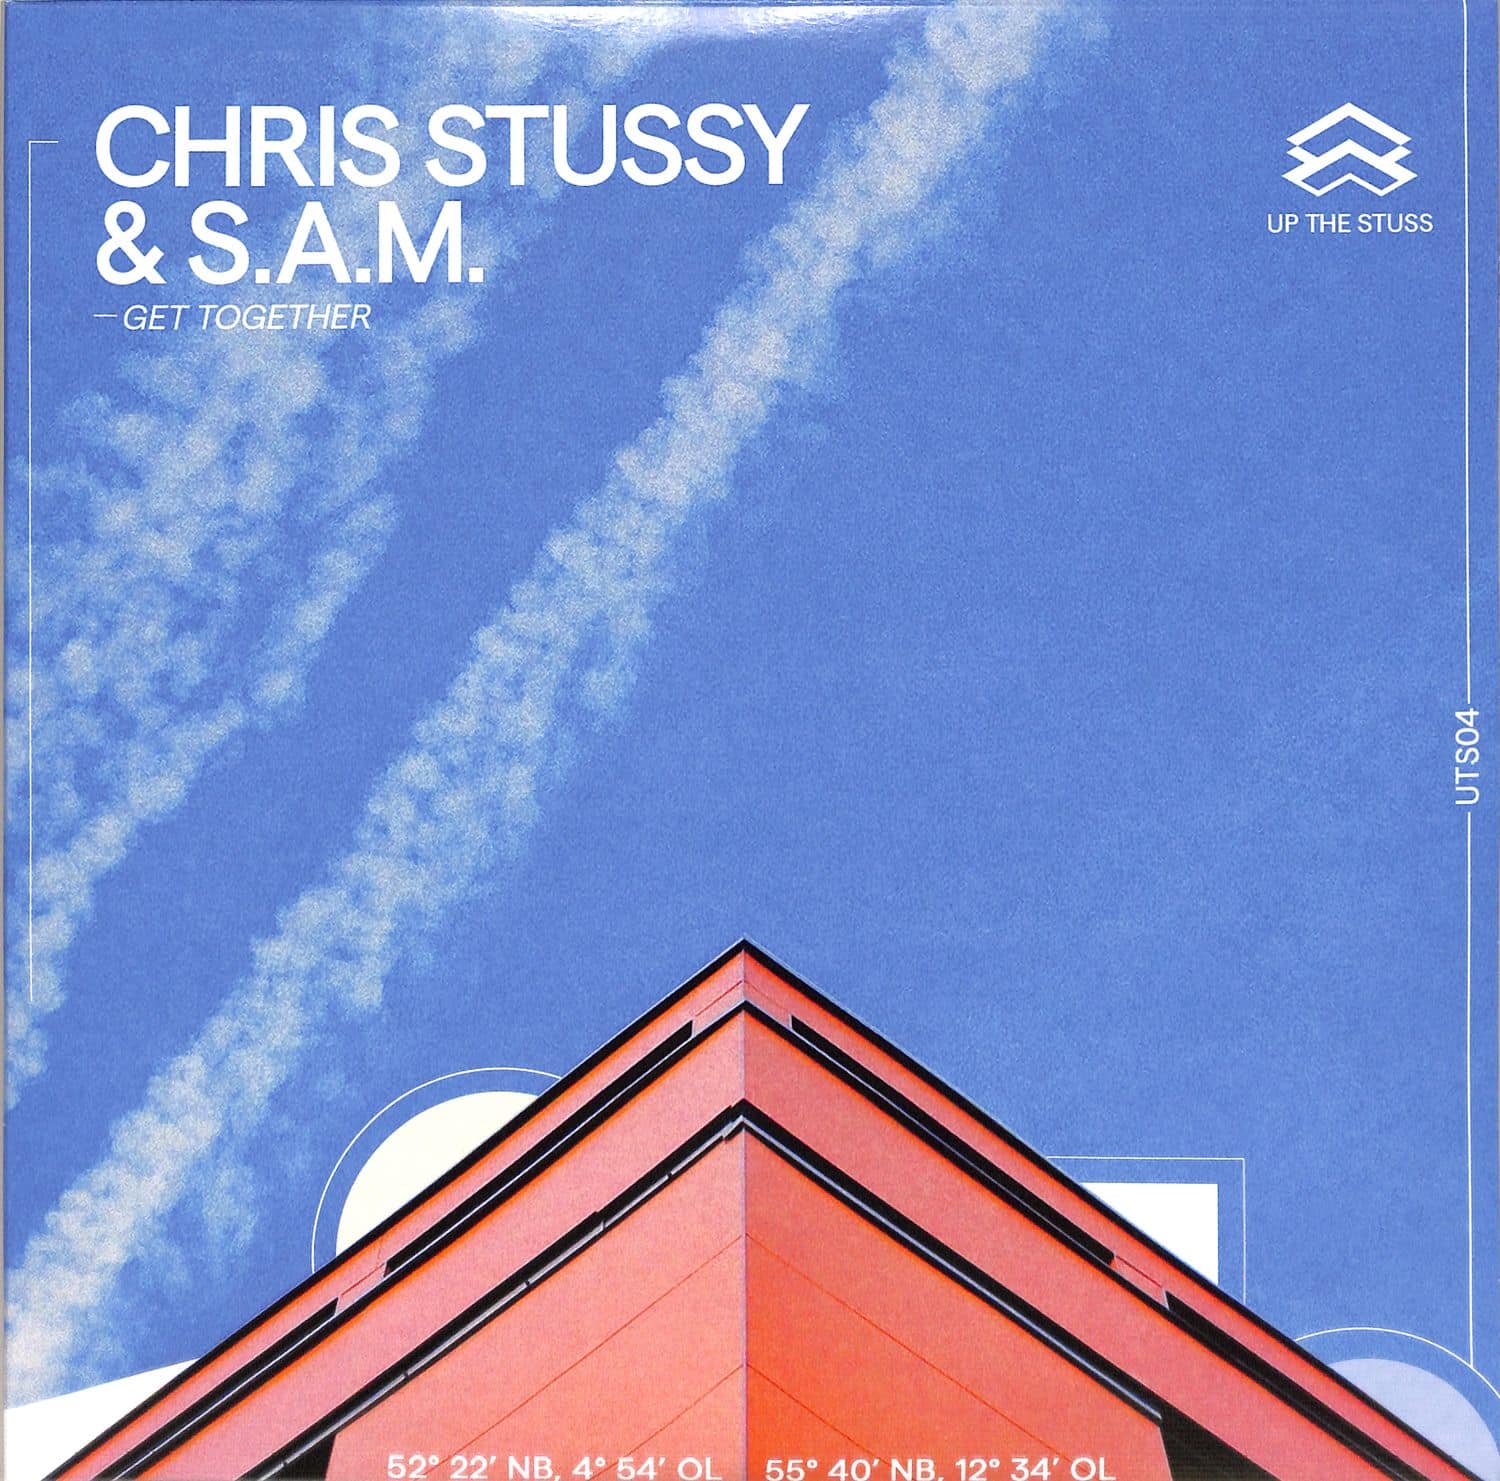 Chris Stussy & S.A.M. - GET TOGETHER 